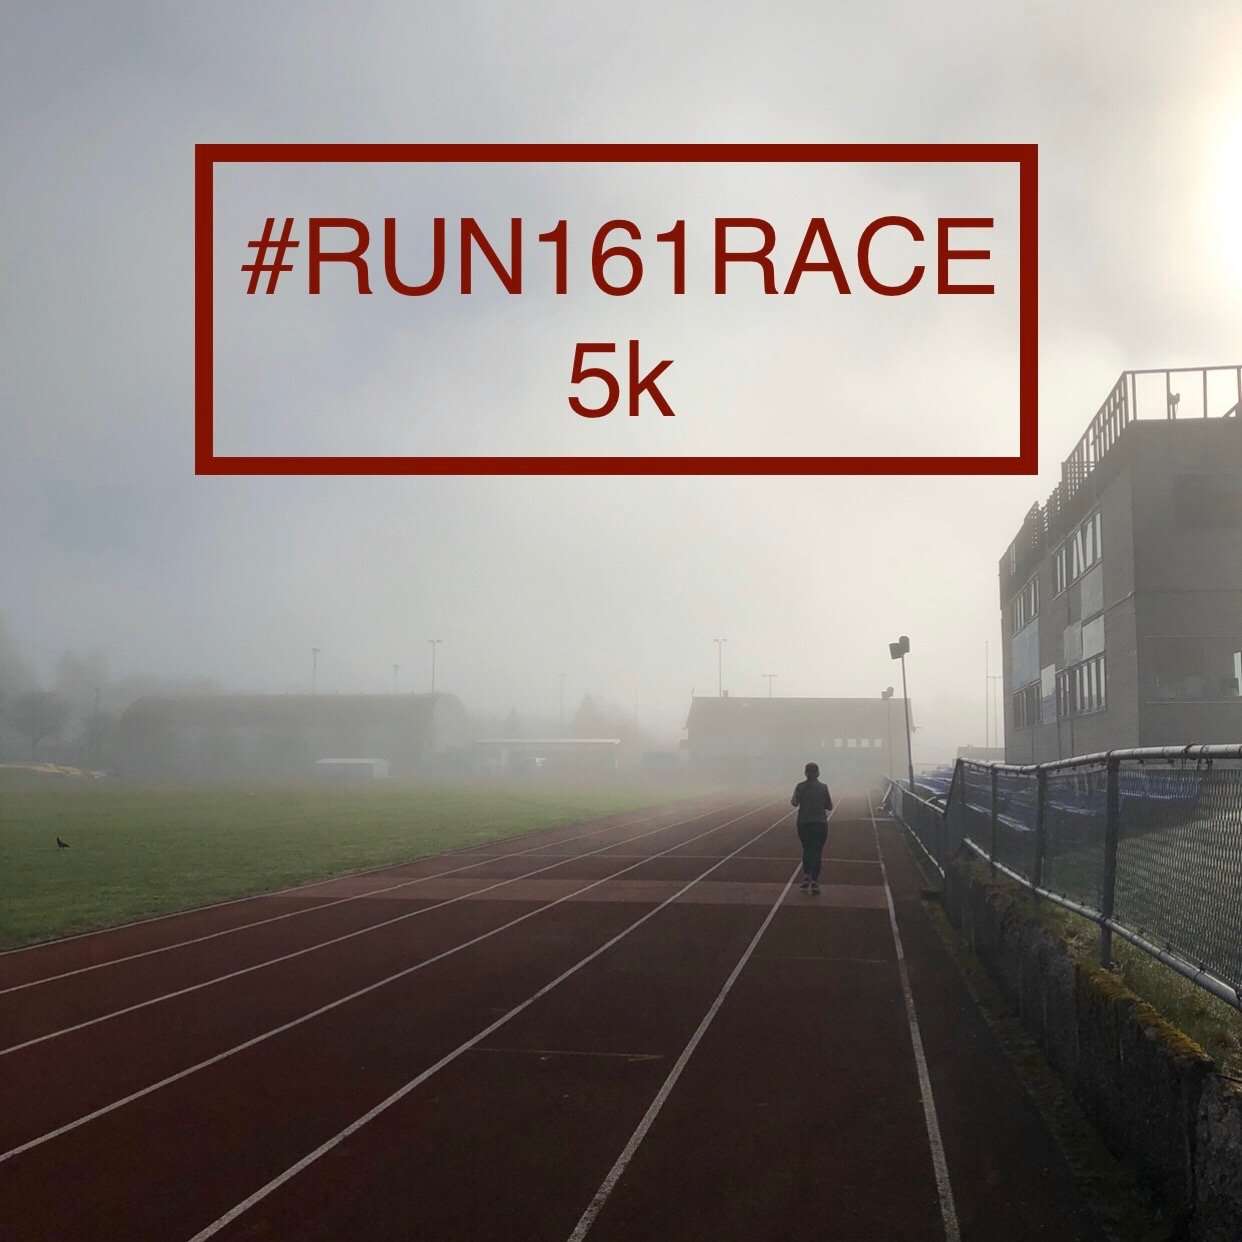 #Run161Race 5k: Results